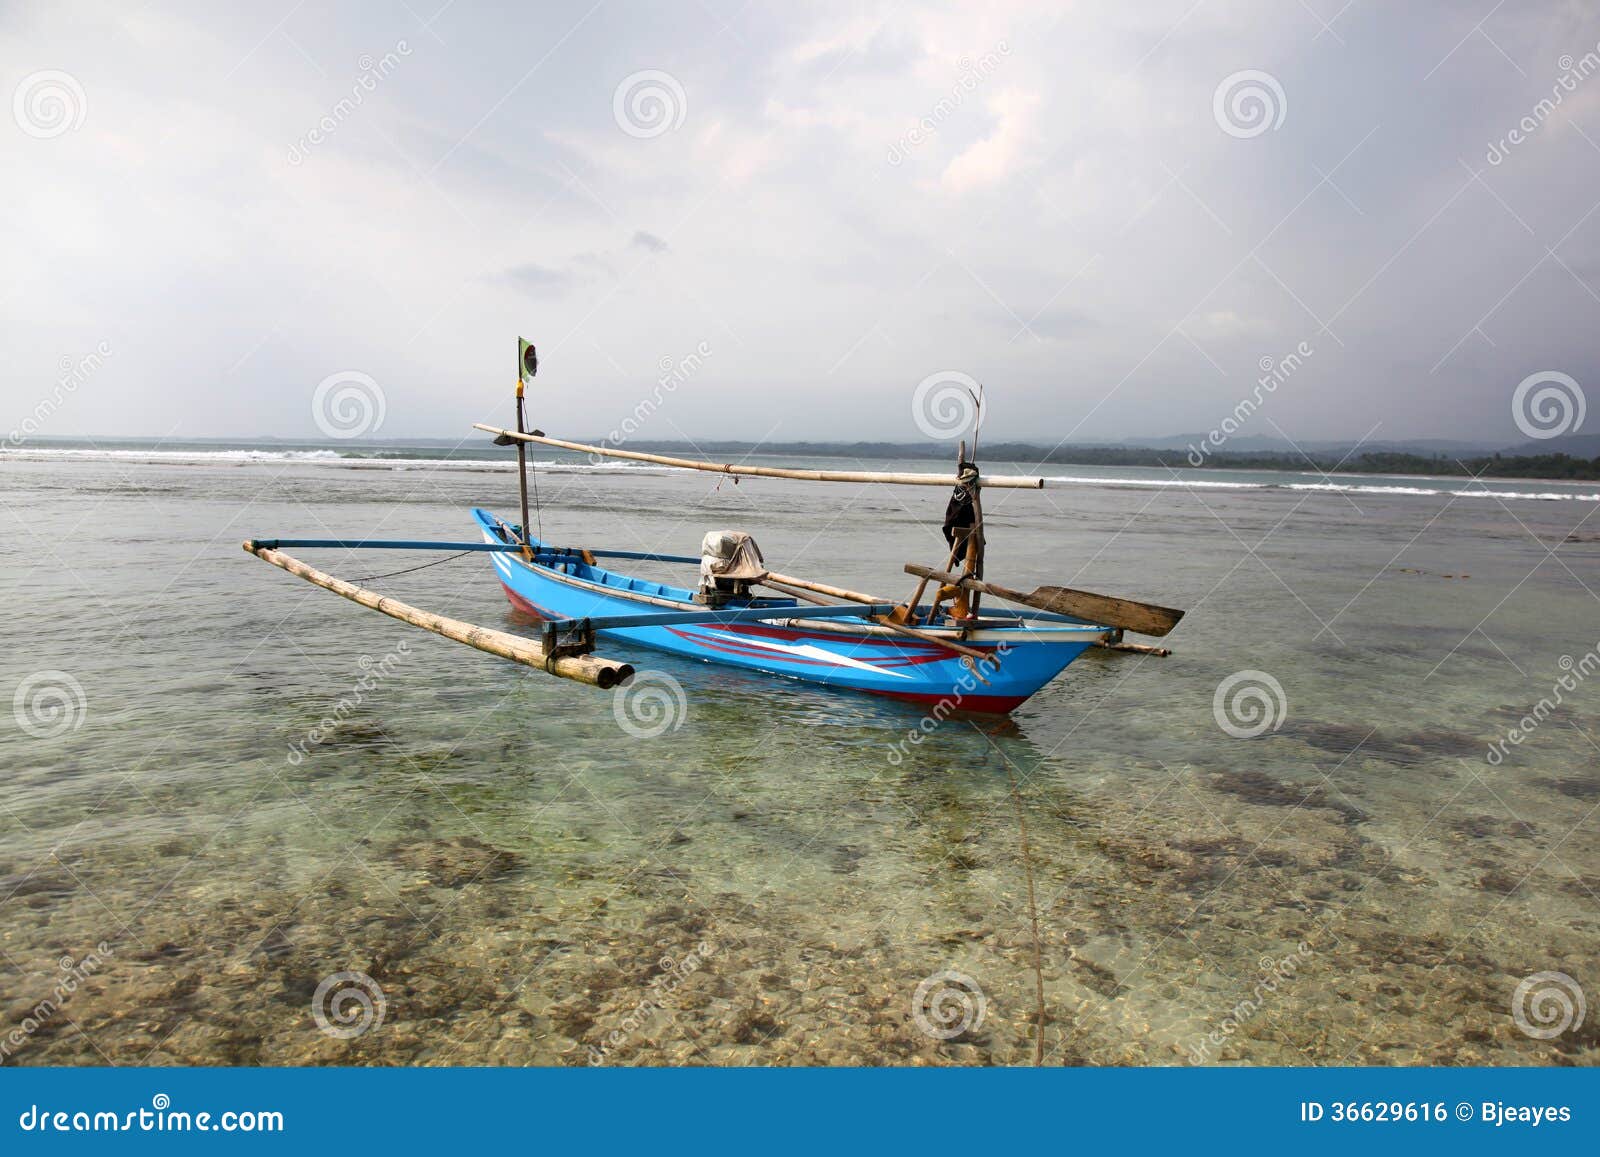 Indonesian Fishing Boat Royalty Free Stock Image - Image ...